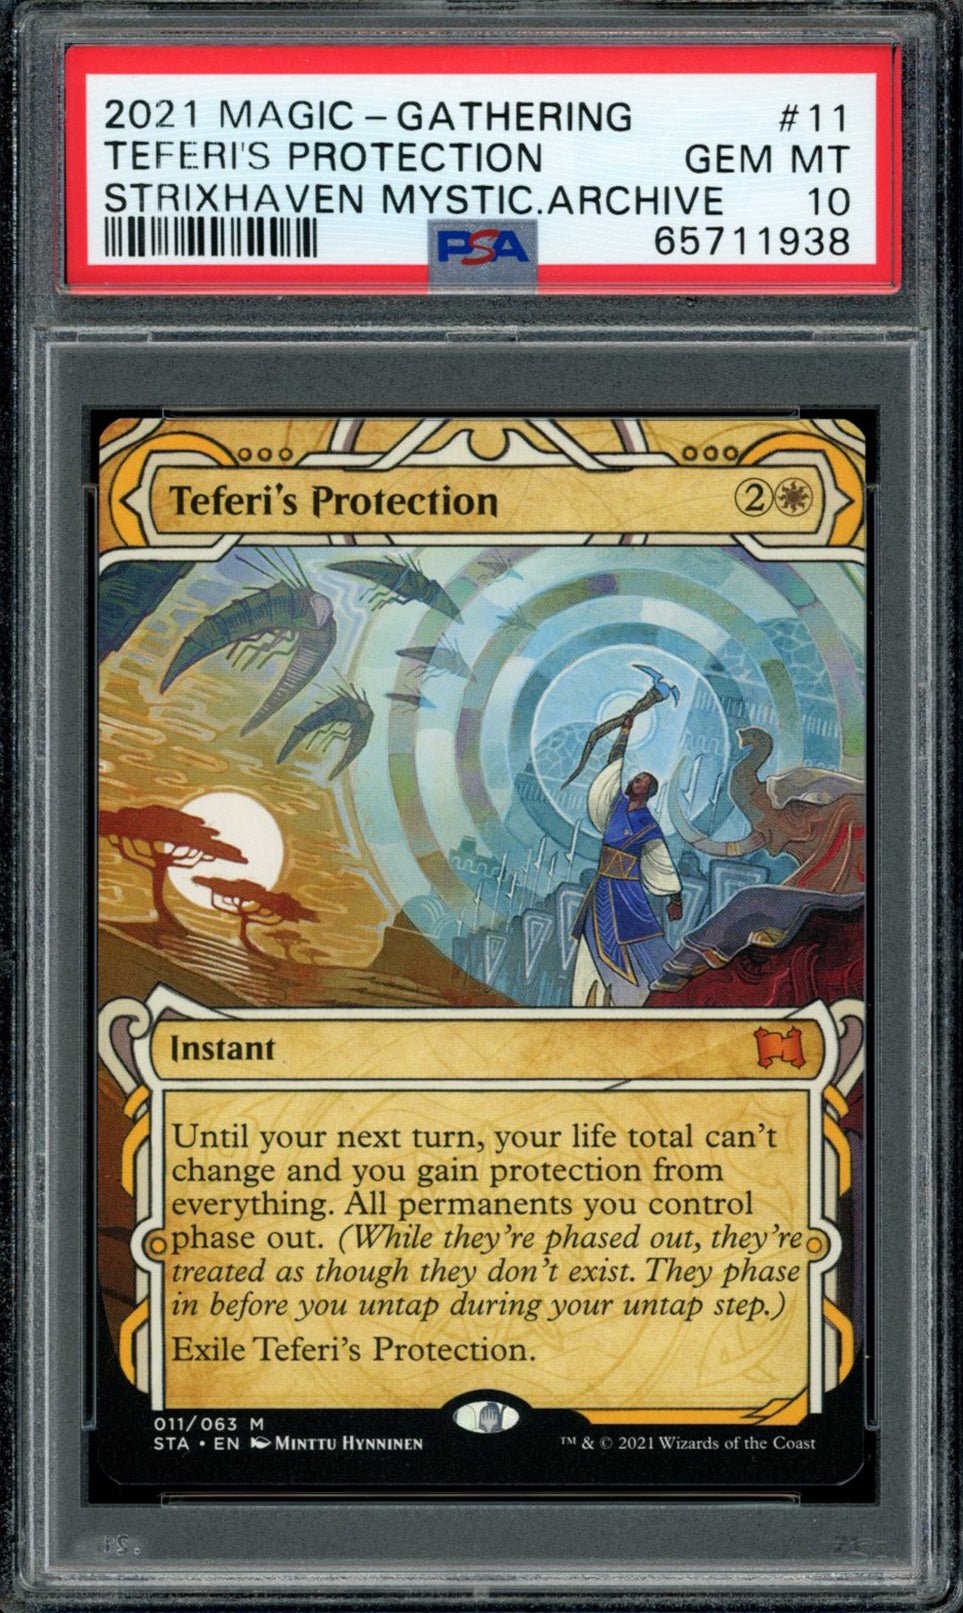 TEFERI'S PROTECTION PSA 10 2021 Strixhaven Mystical Archive Magic the Gathering Mythic 011 Magic the Gathering Base Graded Cards - Hobby Gems